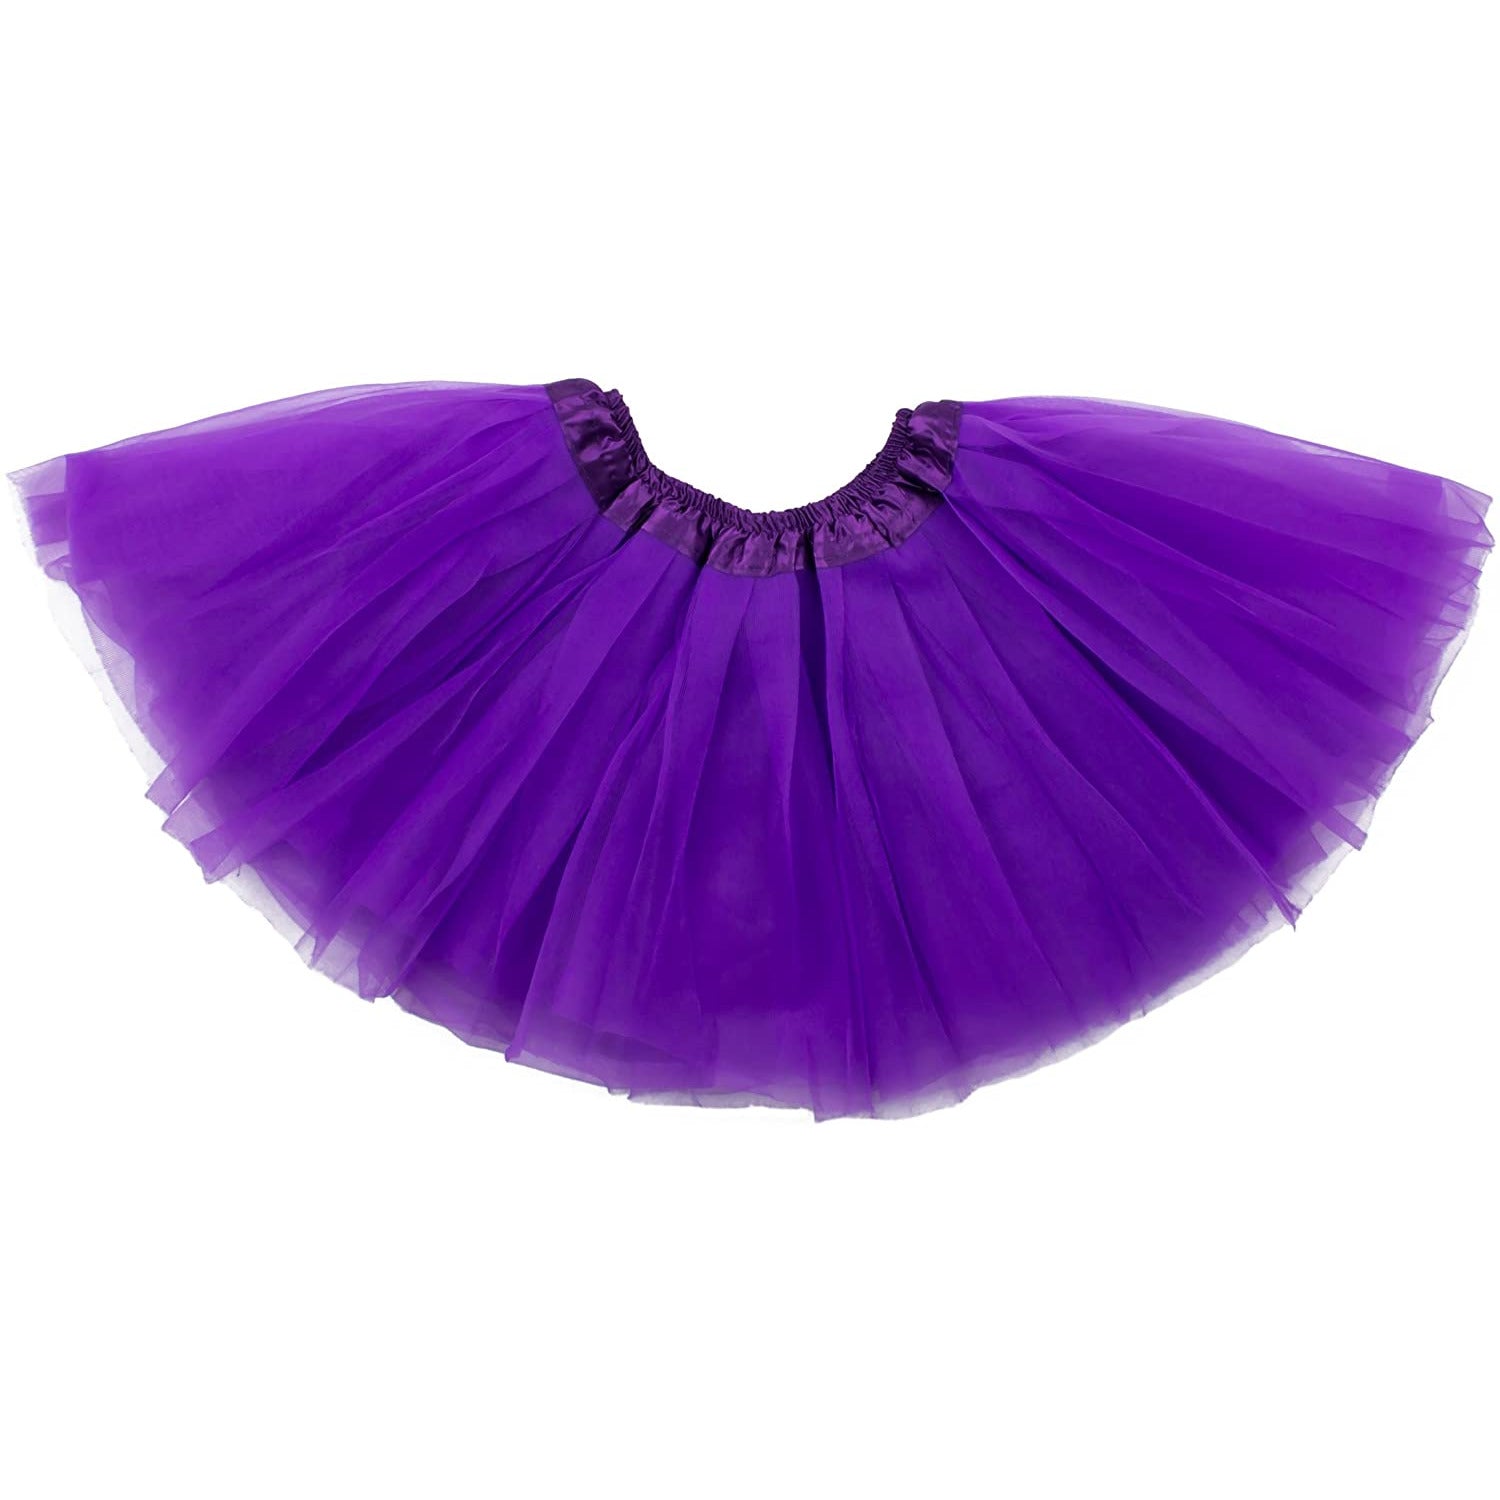 Dancina Tulle Skirt for Girls 2-12 years In Dark Purple